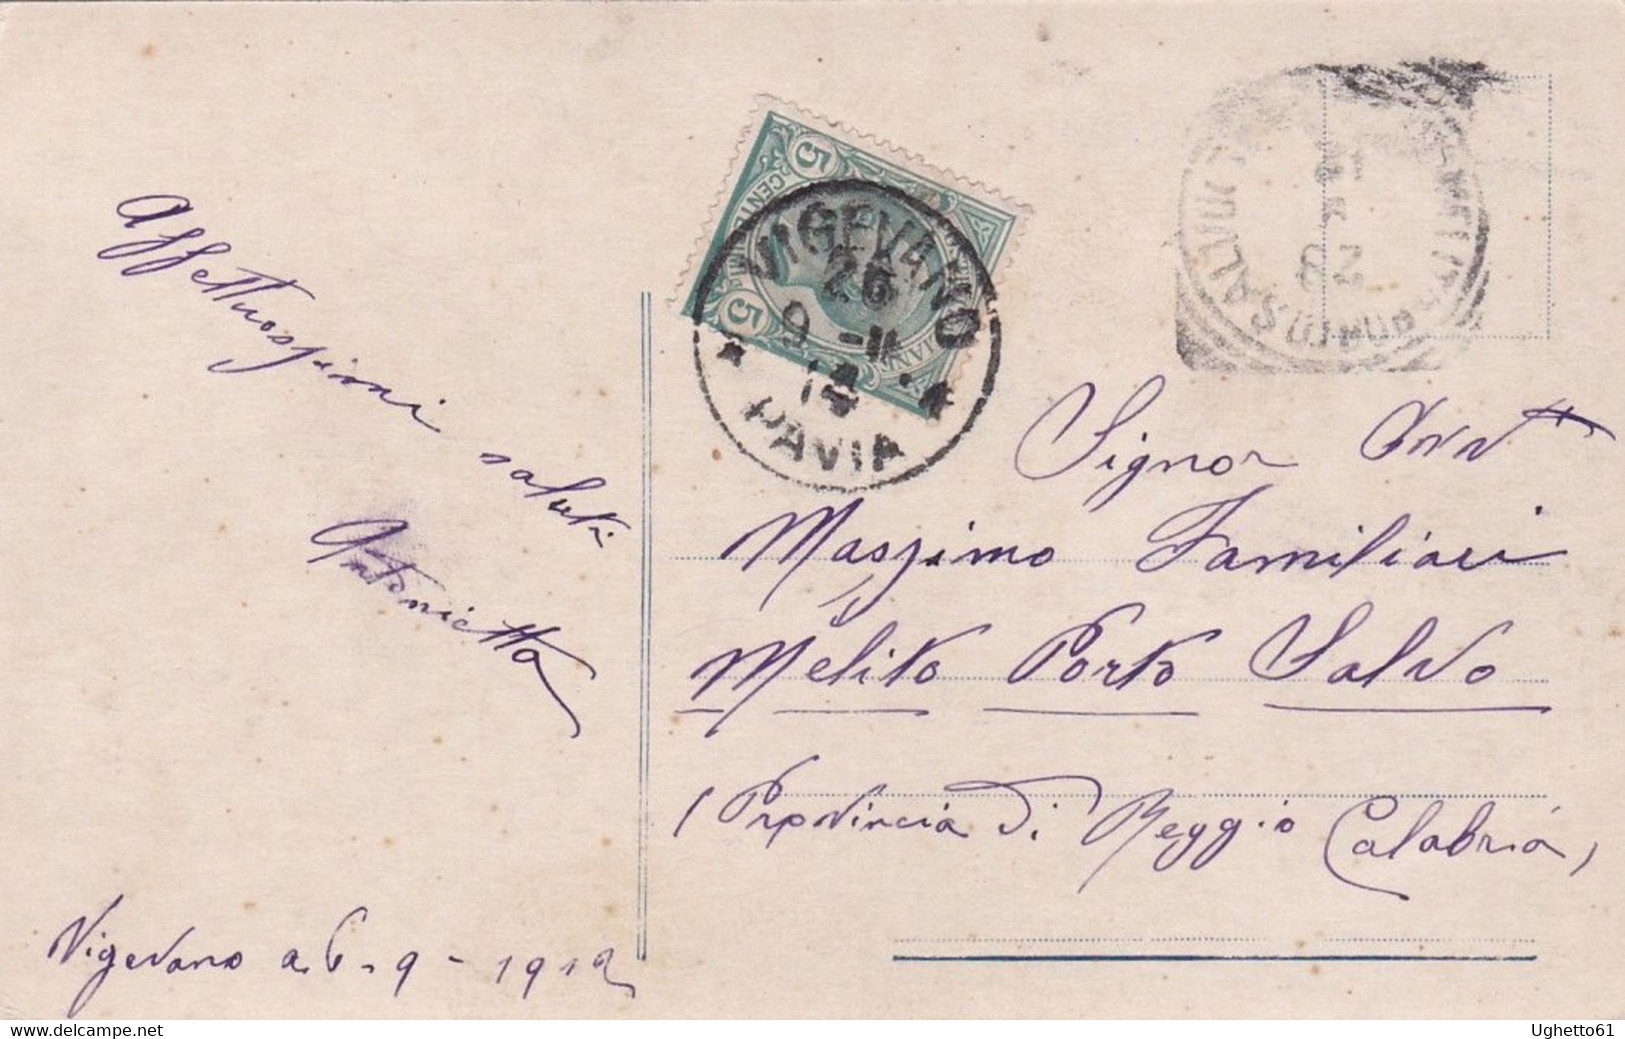 Cartolina D'epoca Spedita Da Vigevano Viaggiata 1912 - Vigevano